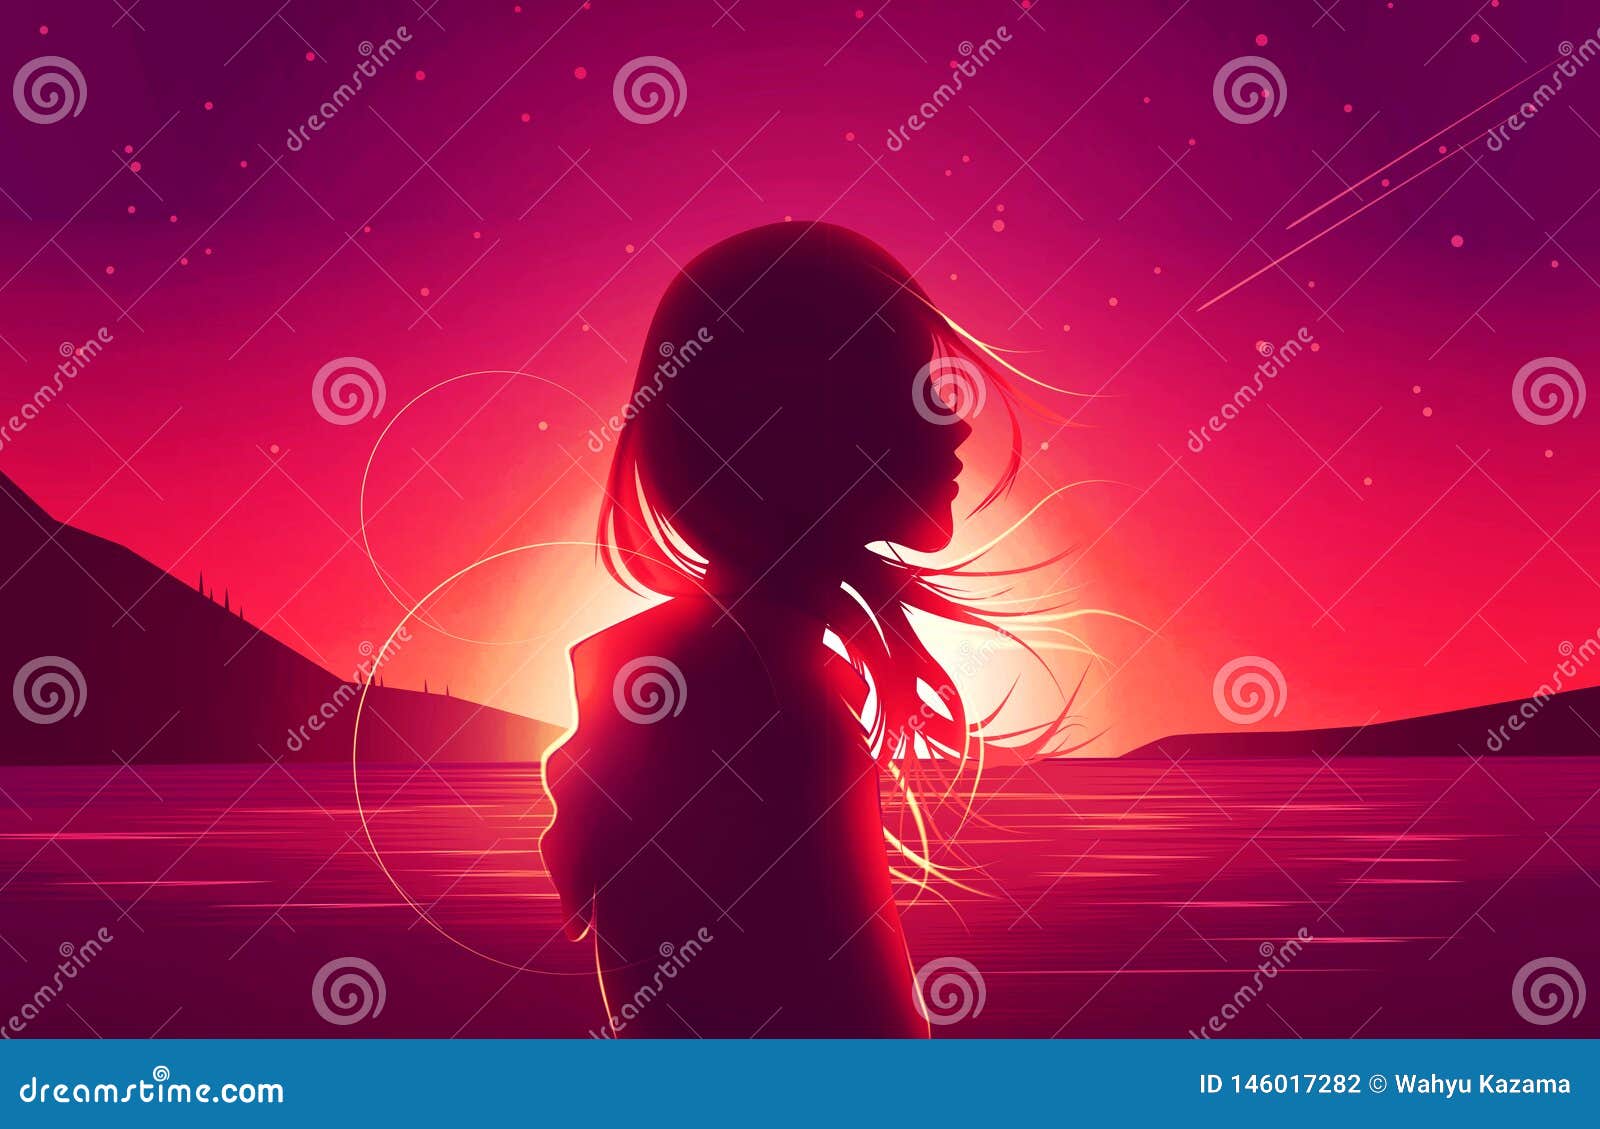 Silhouette Sad Girl Loneliness In Twilight Shooting Star Art